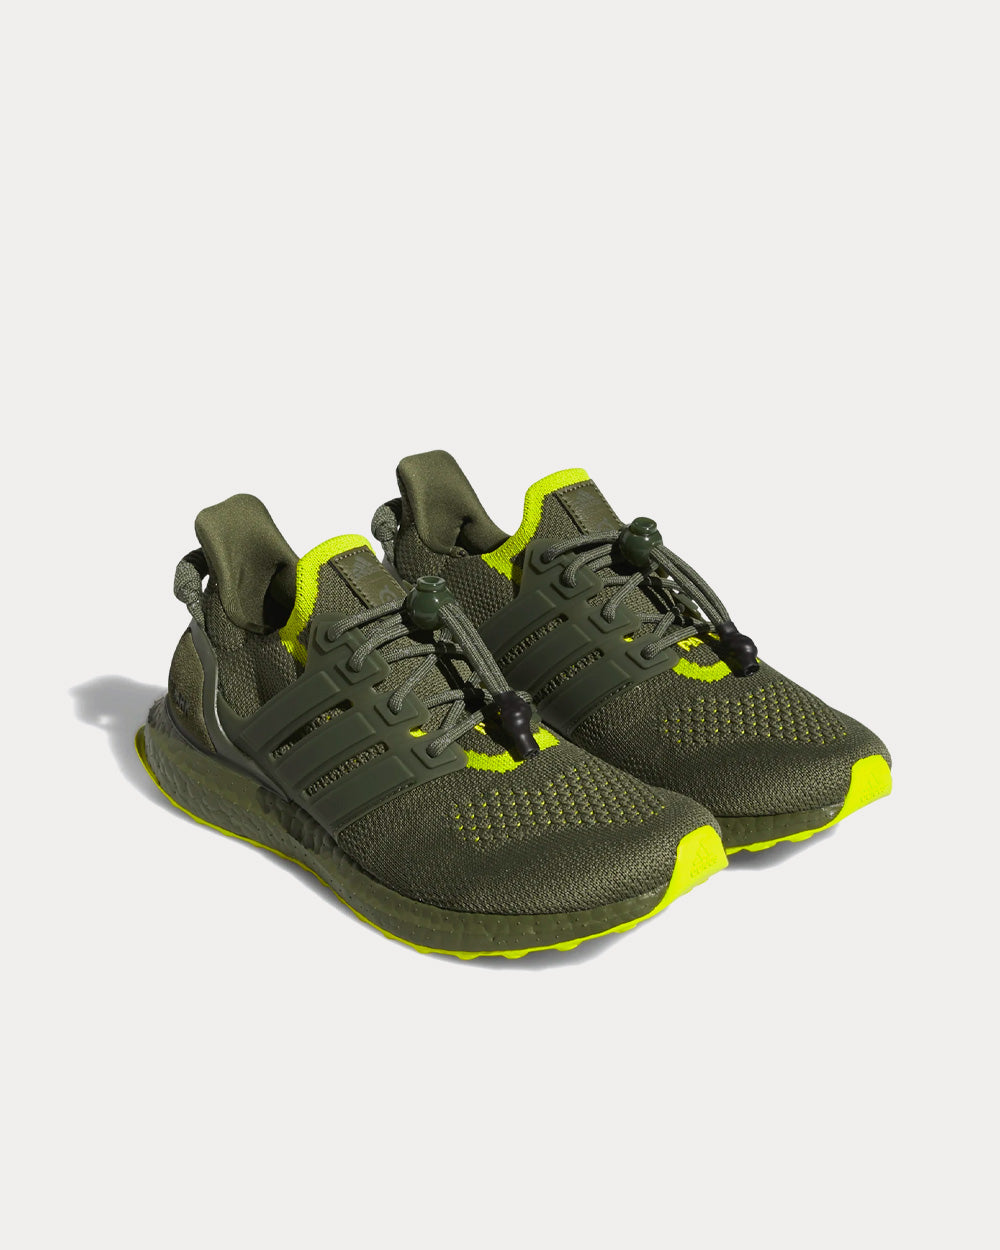 Adidas x Ivy Park - Ultra Boost Peleton Focus Olive / Focus Olive / Shock Slime Running Shoes